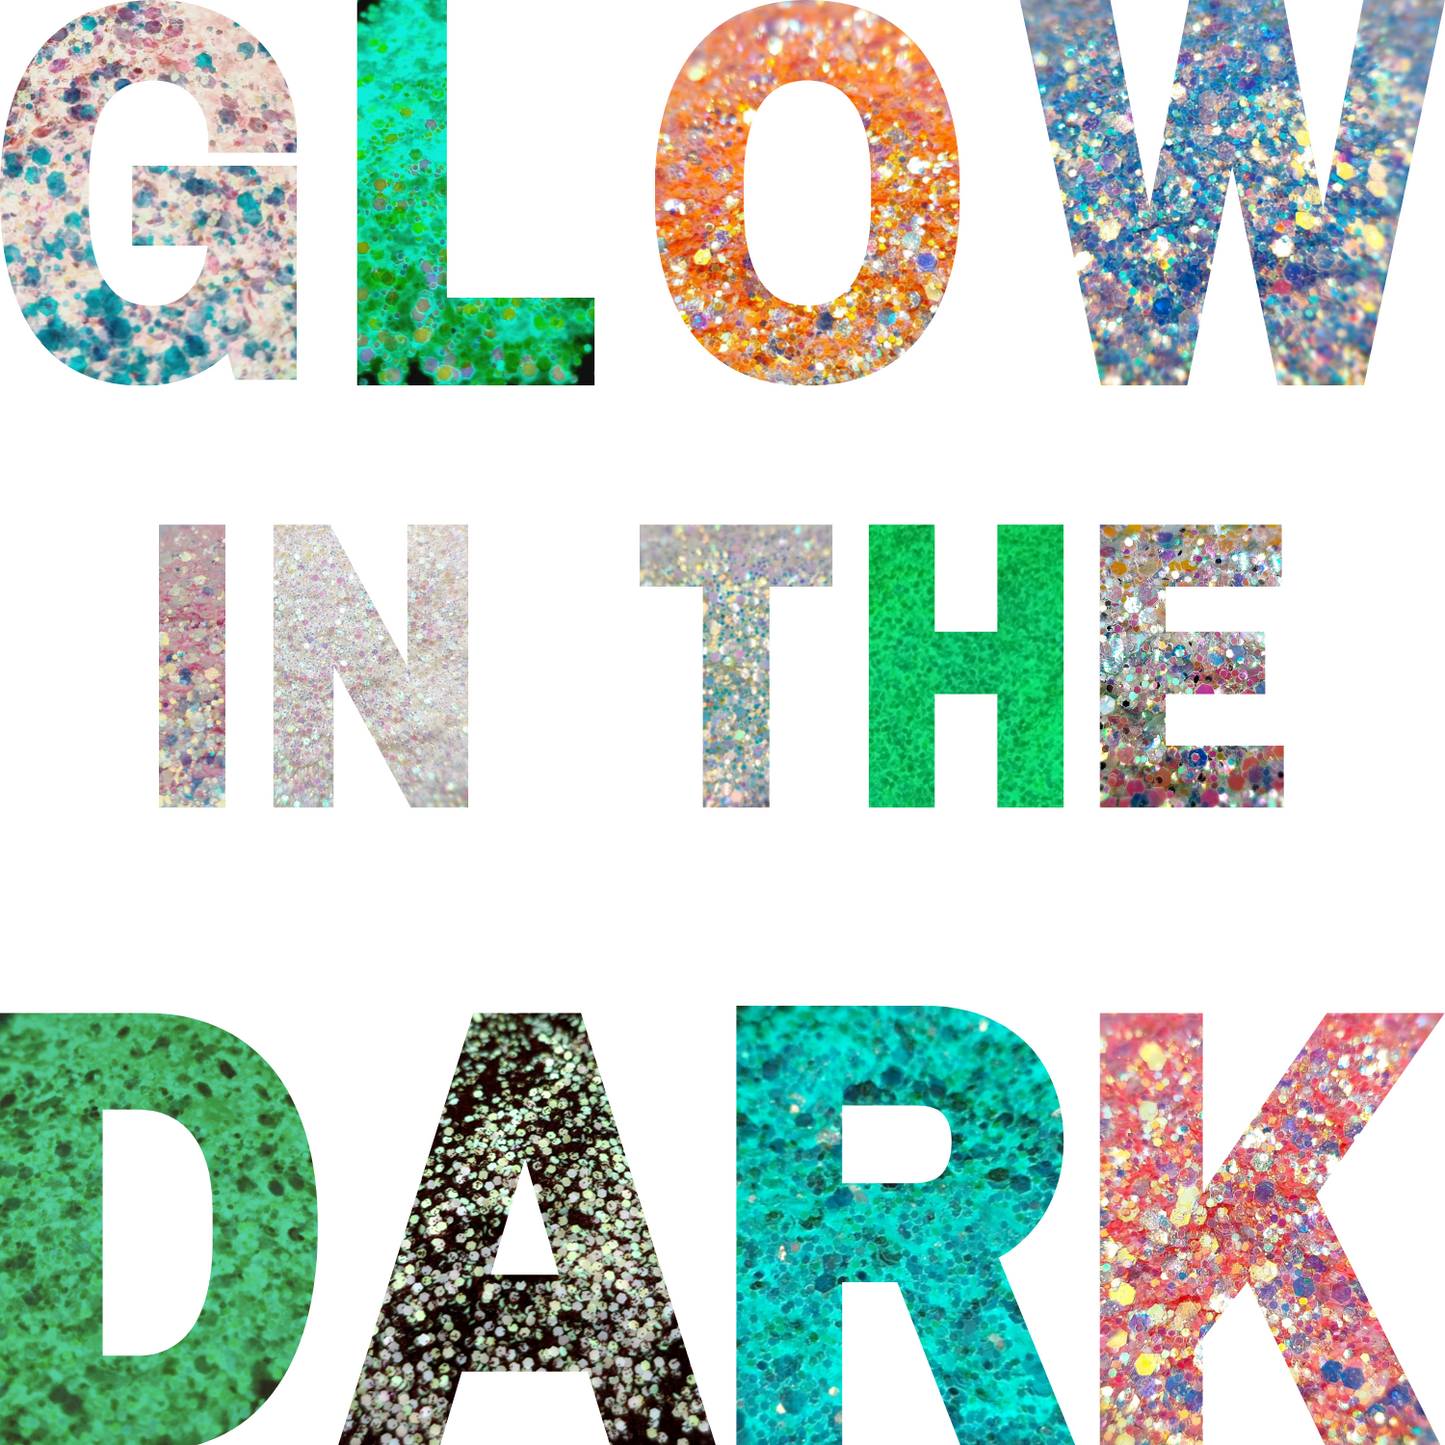 Glow In The Dark Glitter Bundle - Mystic Art Glitters